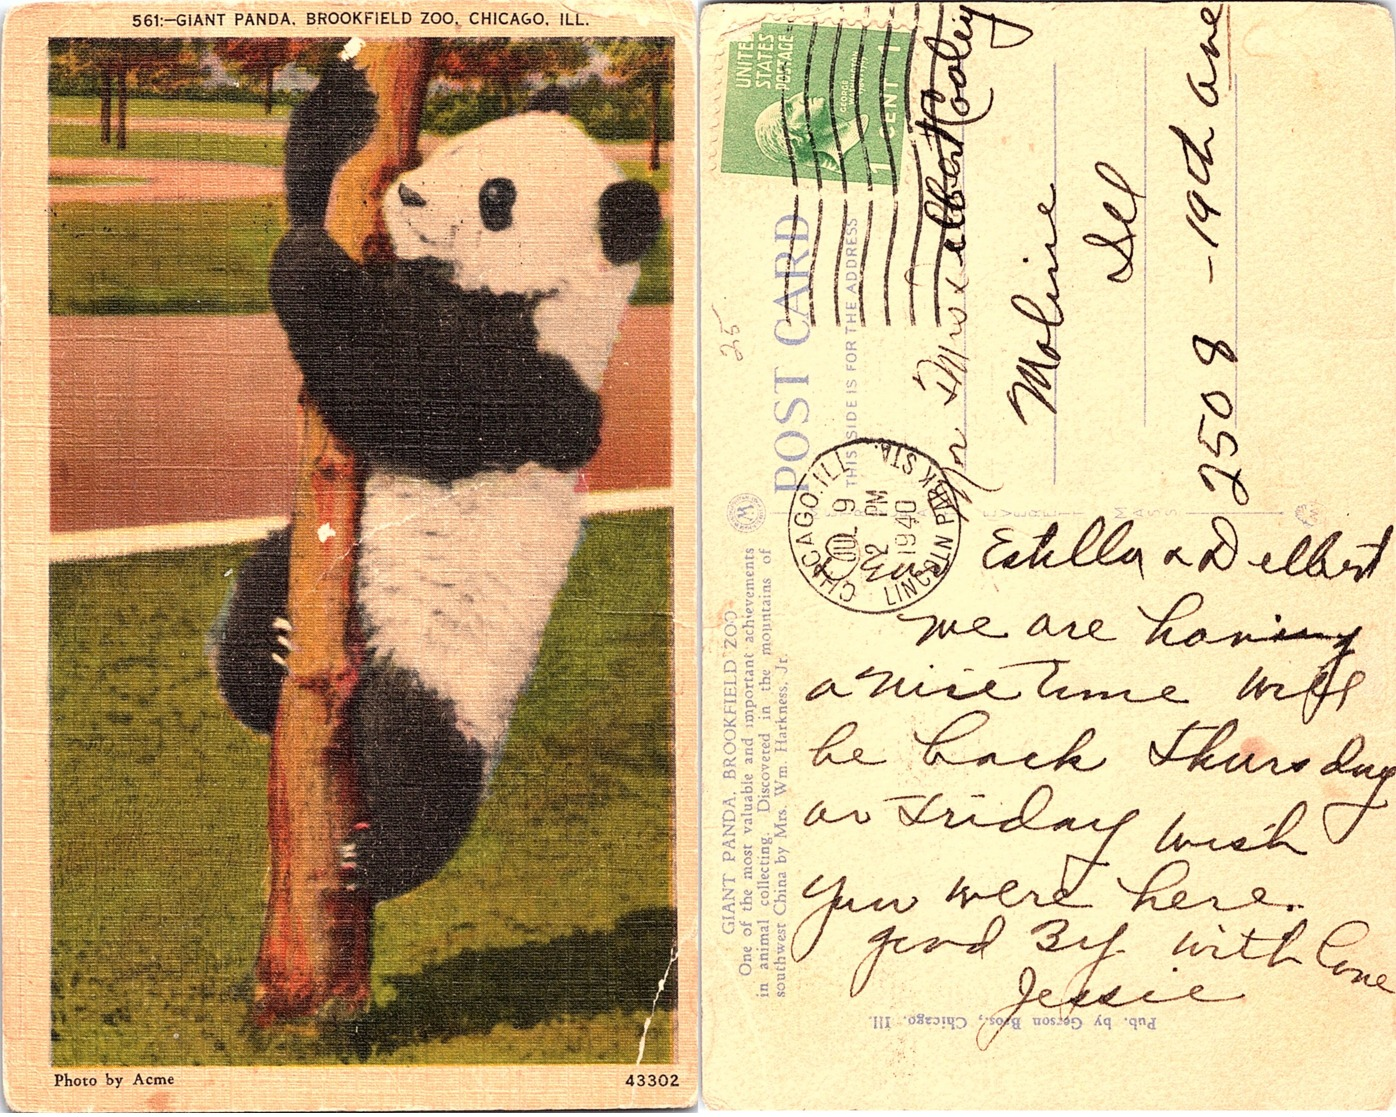 Giant Panda, Brookfield Zoo, Chicago, Illinois - Chicago